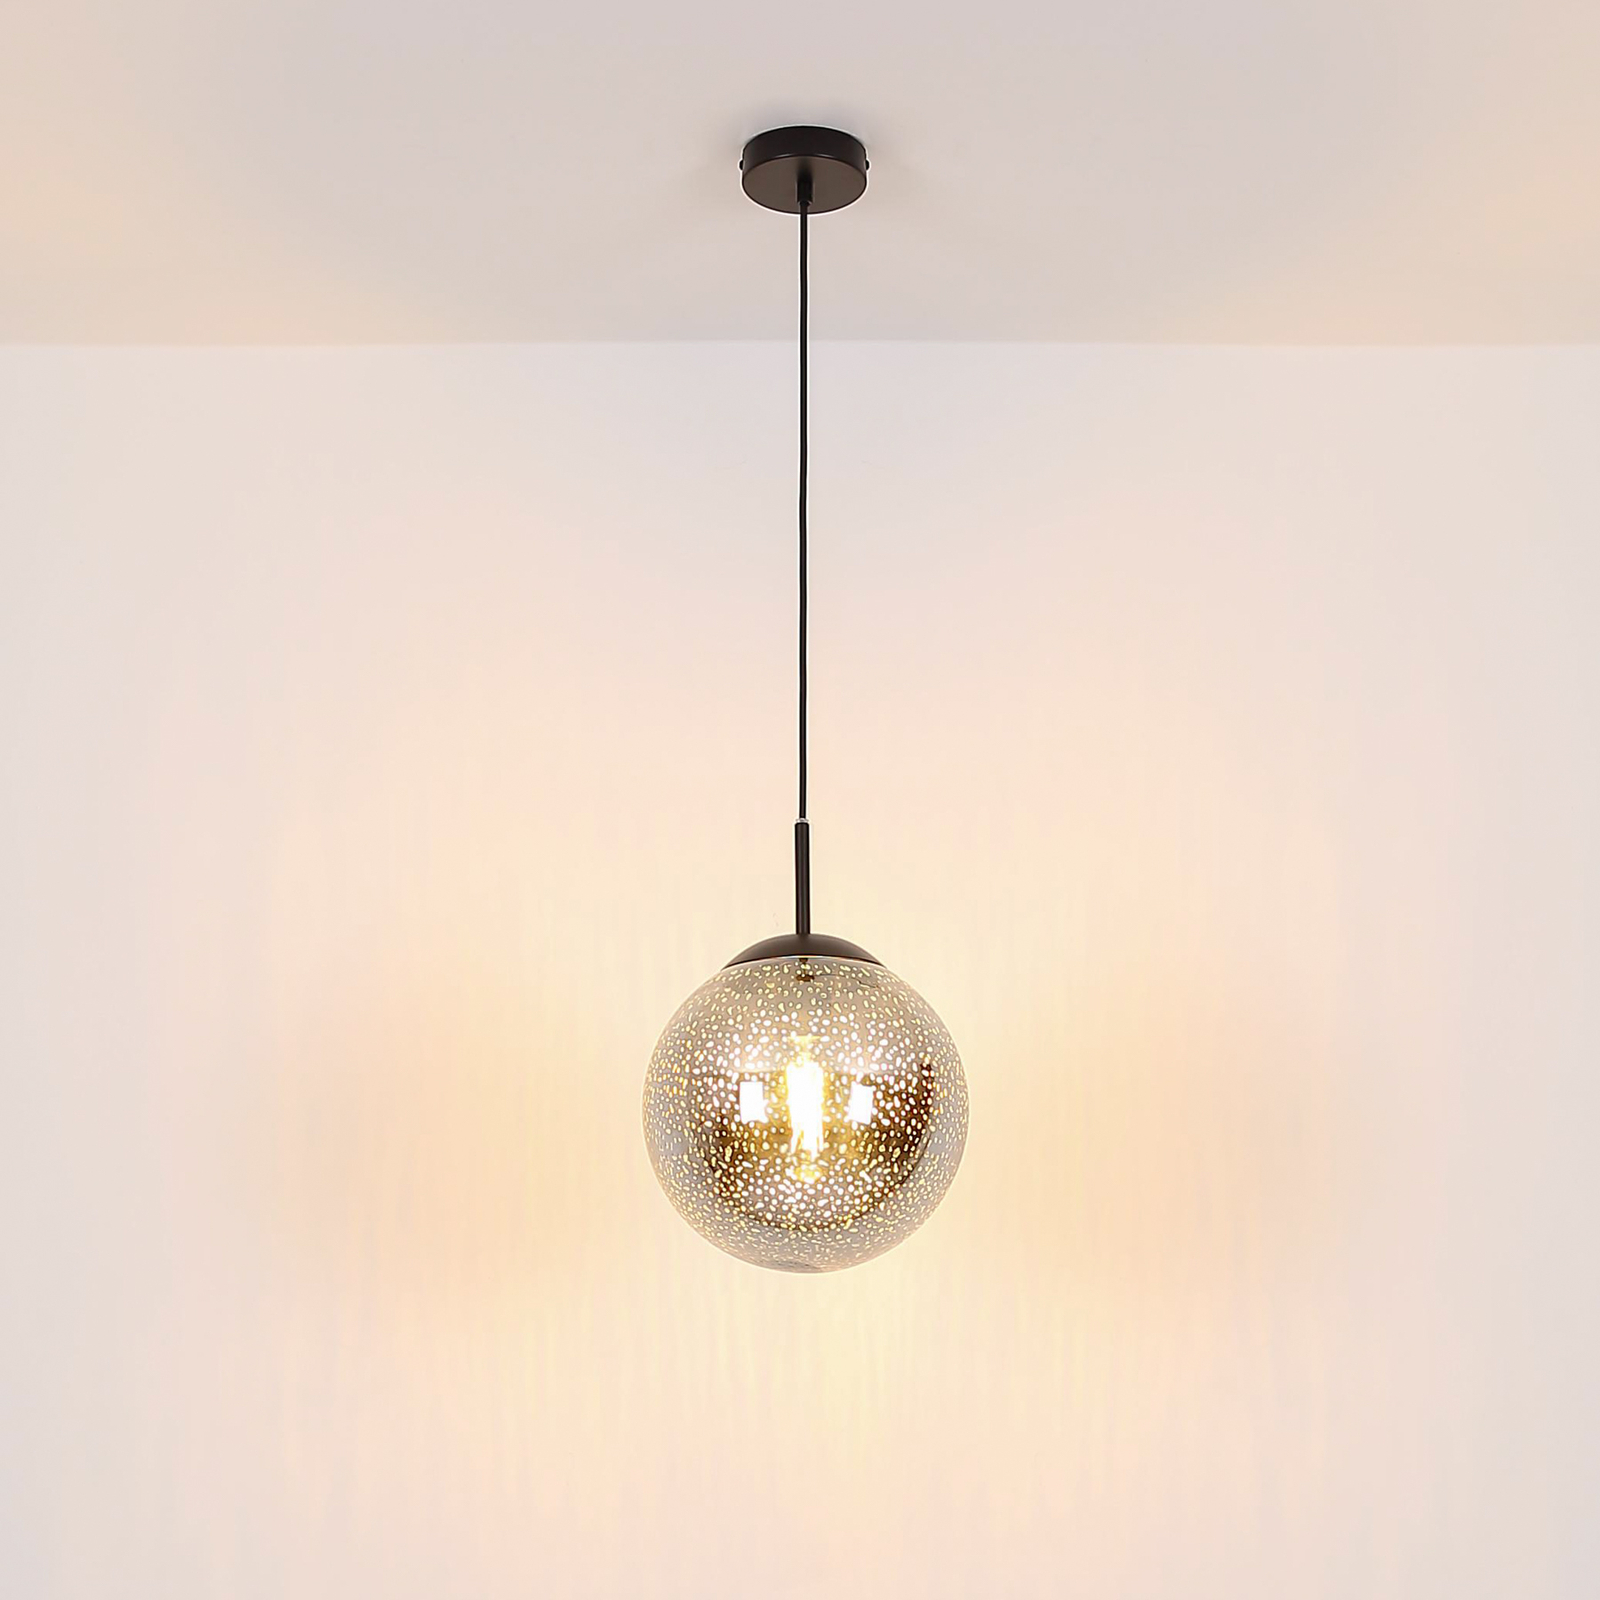 Samos pendant light, Ø 20 cm, smoky grey/black, glass